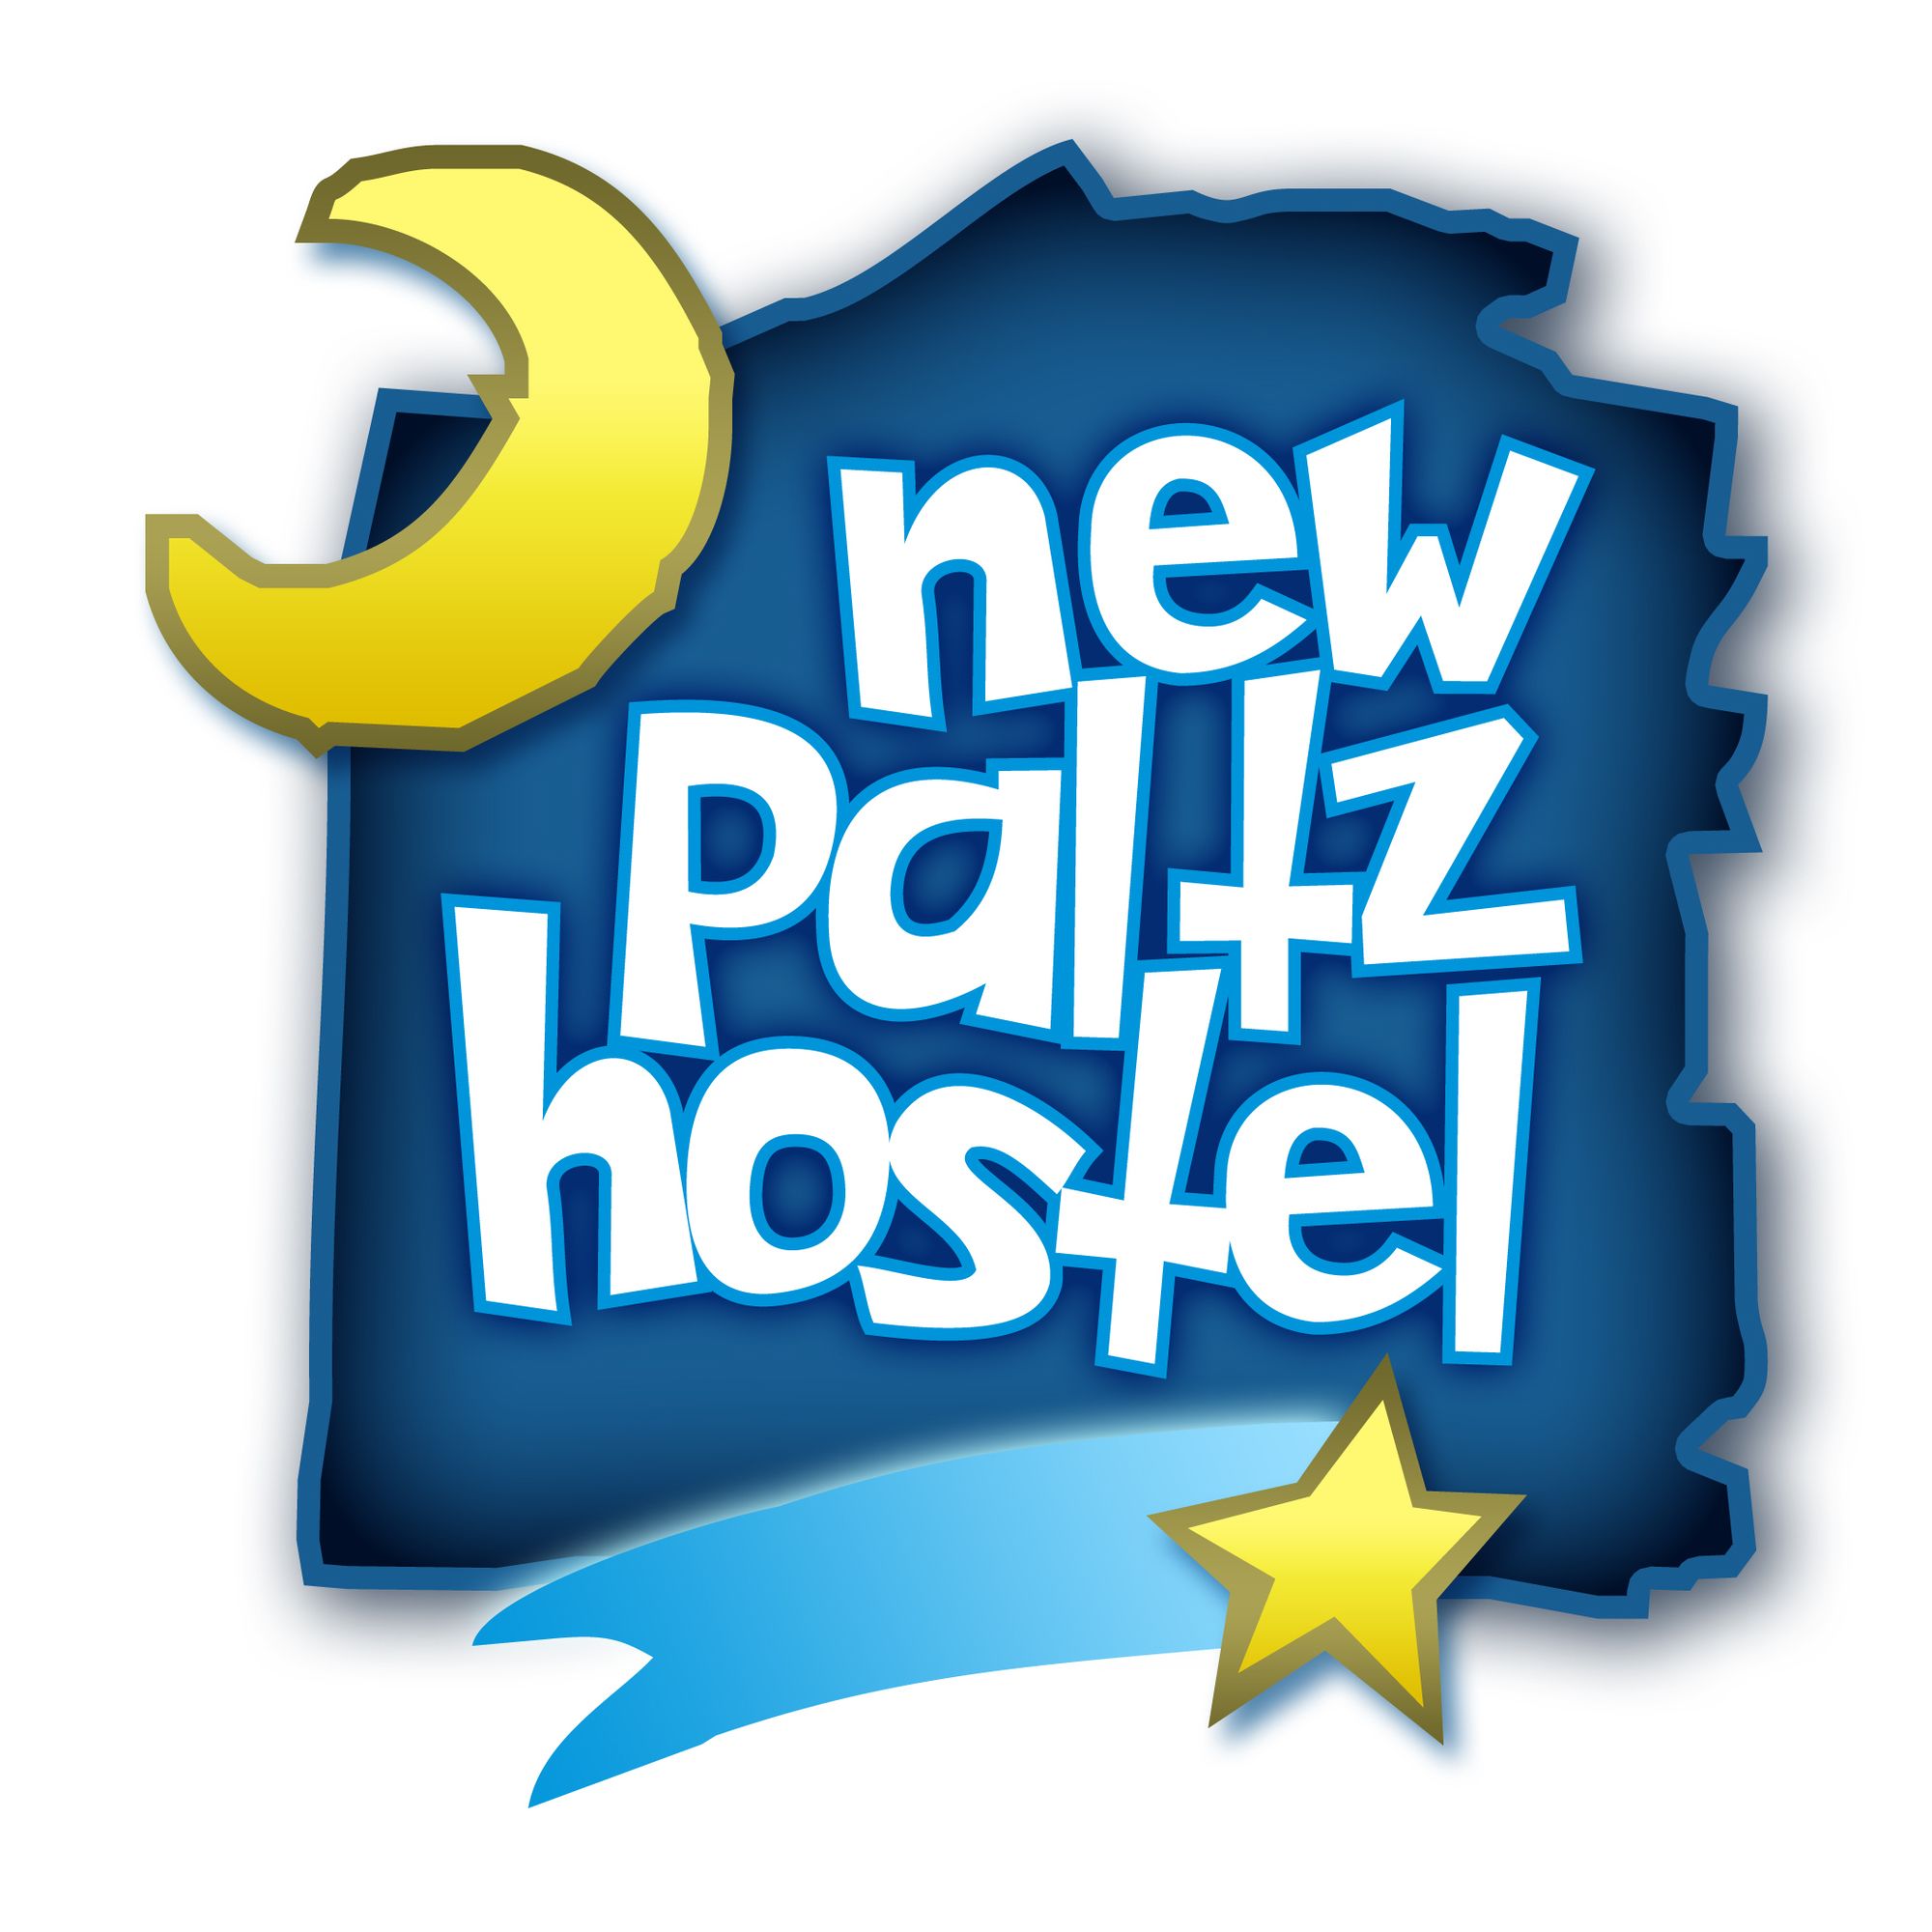 The New Paltz Hostel